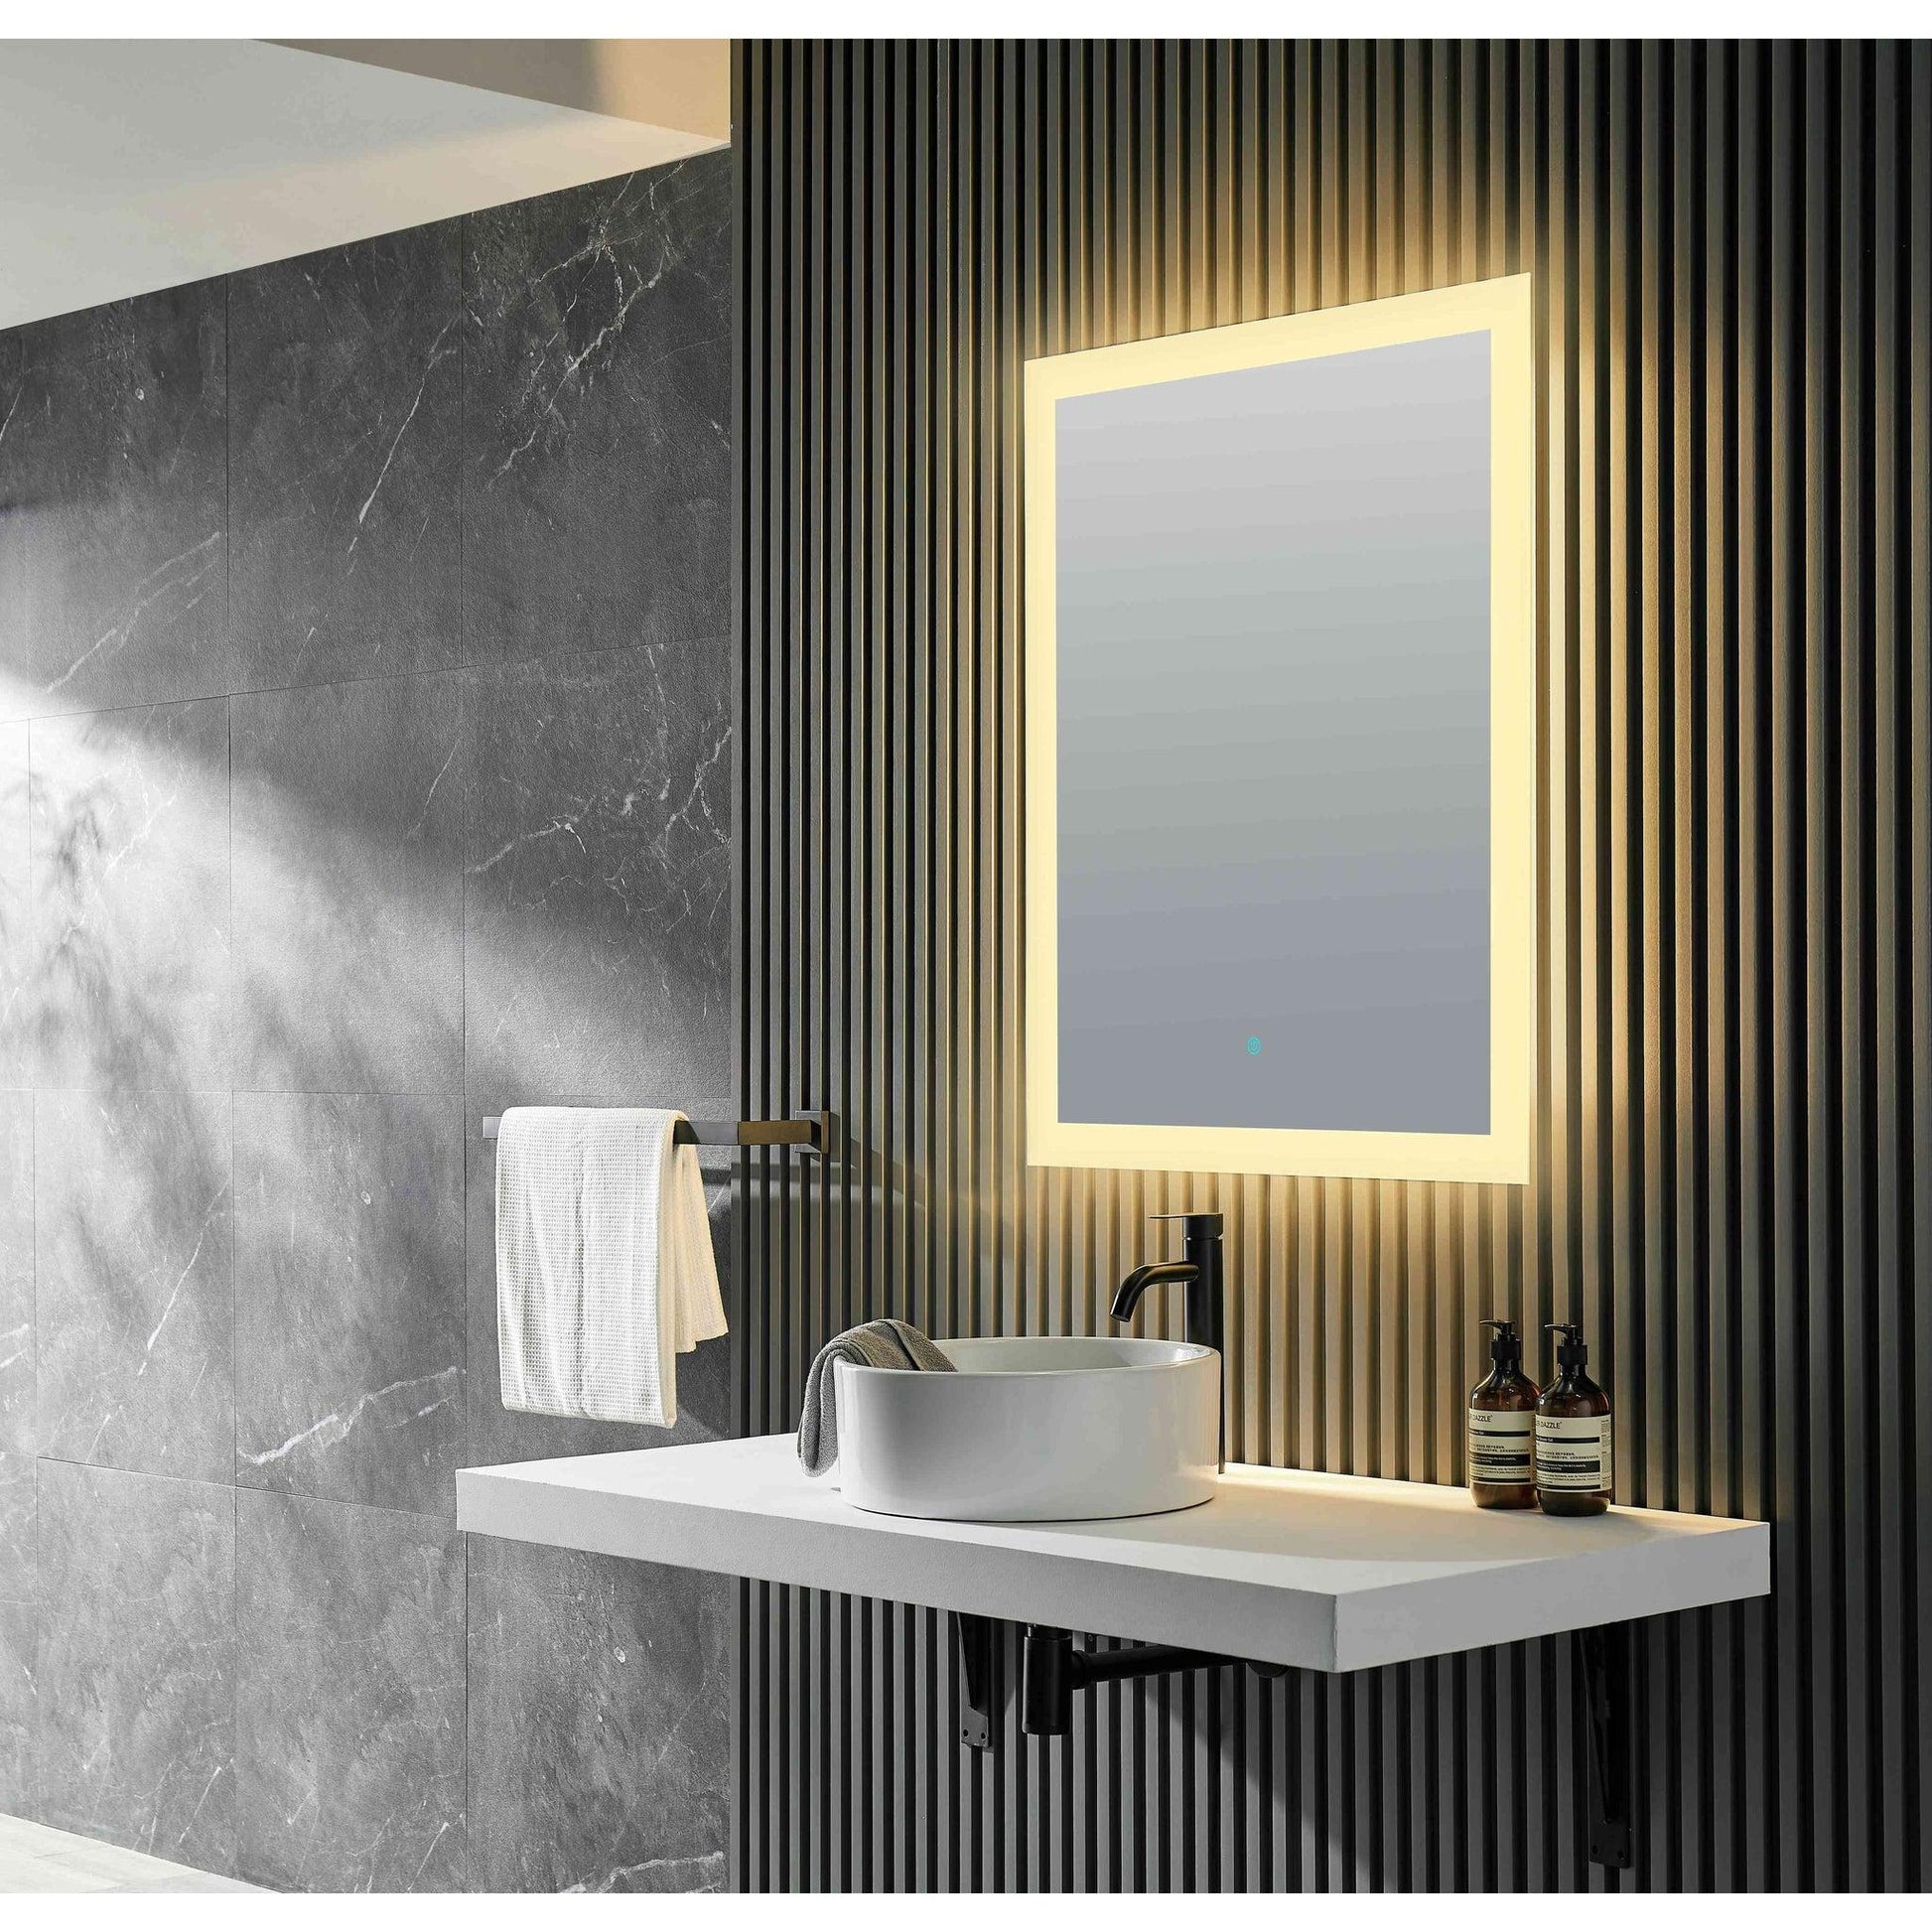 ANZZI Olympus Series 36" x 24" Frameless Led Bathroom Mirror With Built-In Defogger